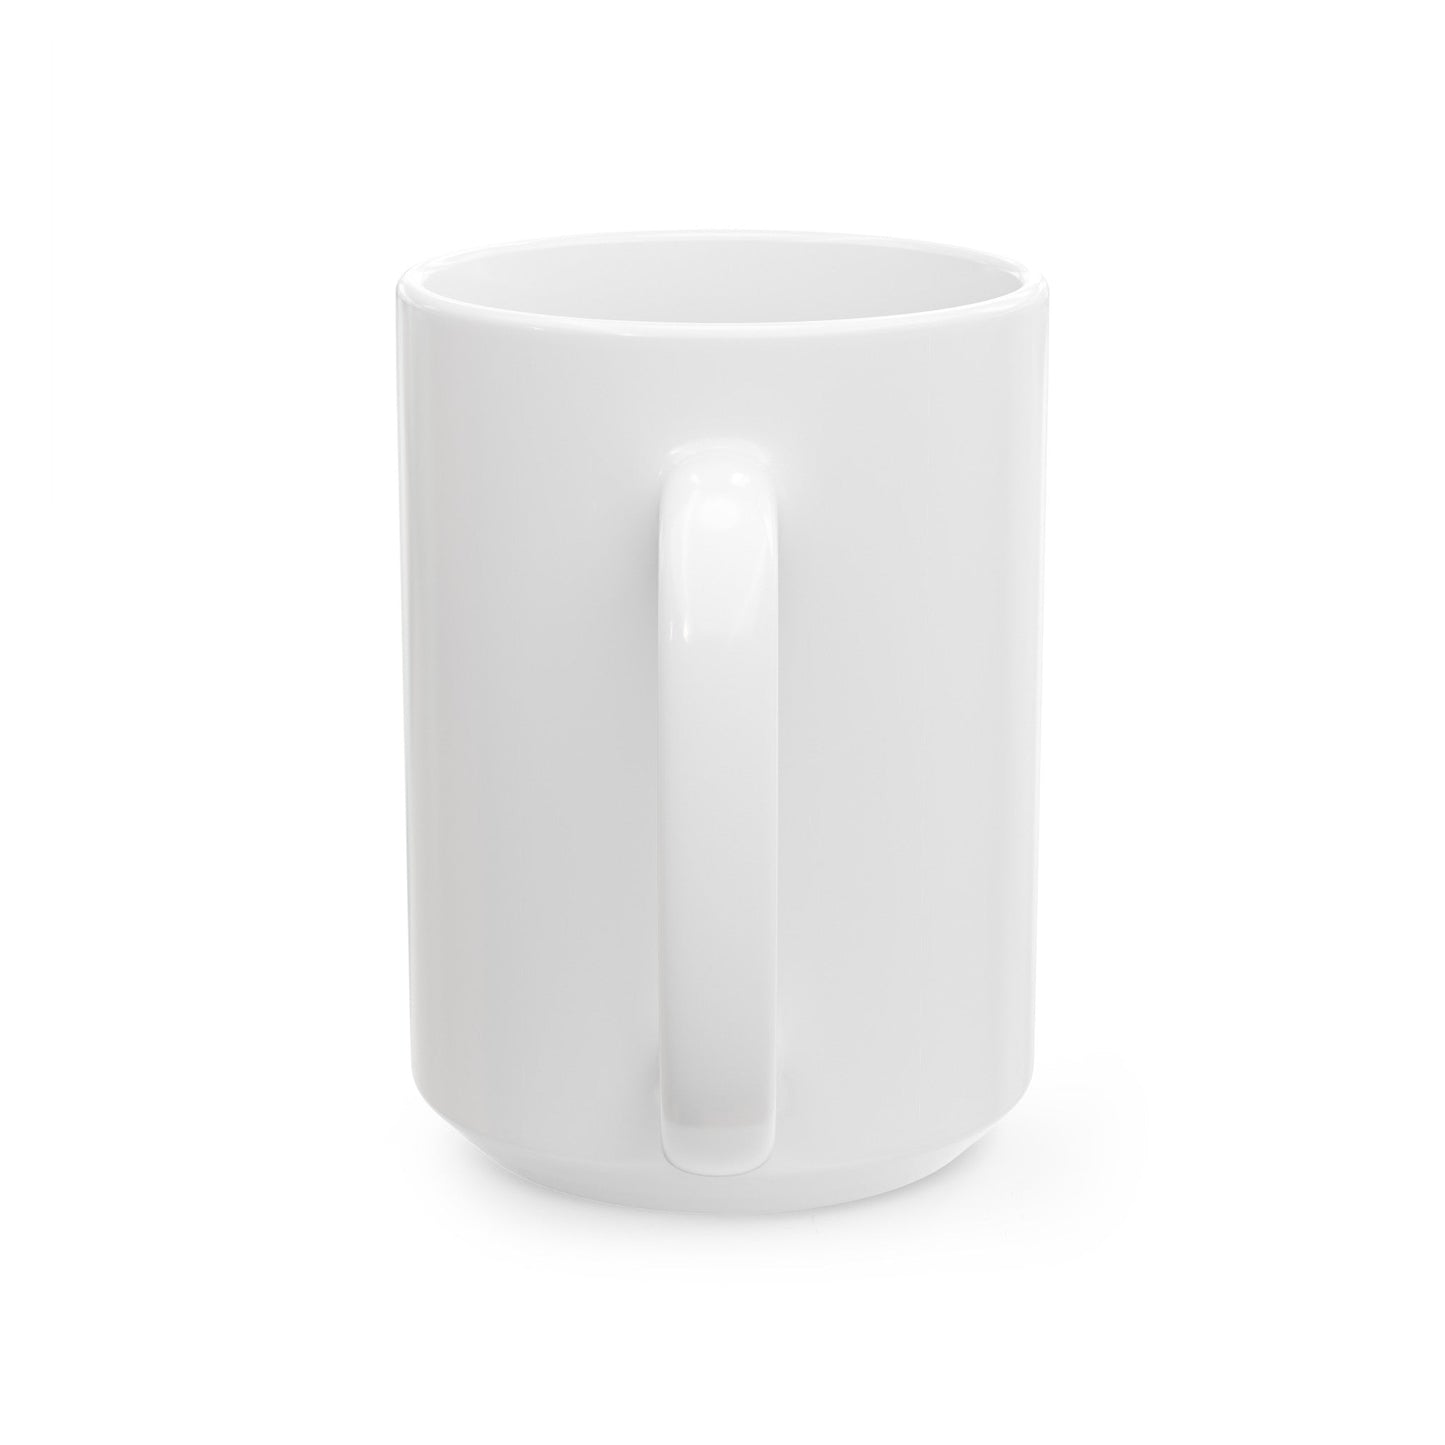 128 ACCS (U.S. Air Force) White Coffee Mug-The Sticker Space